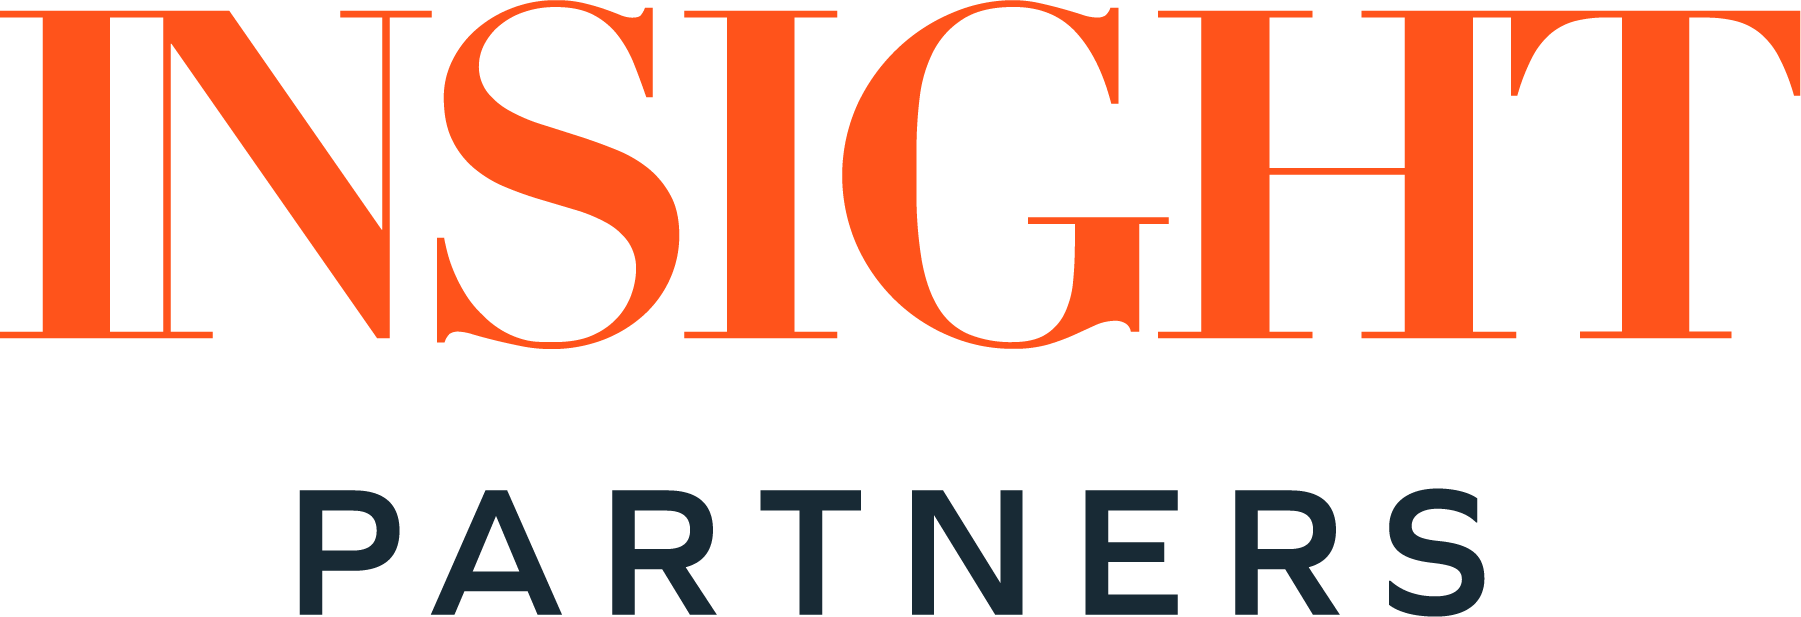 Insight Partners - Insight Venture Partners - венчурный фонд